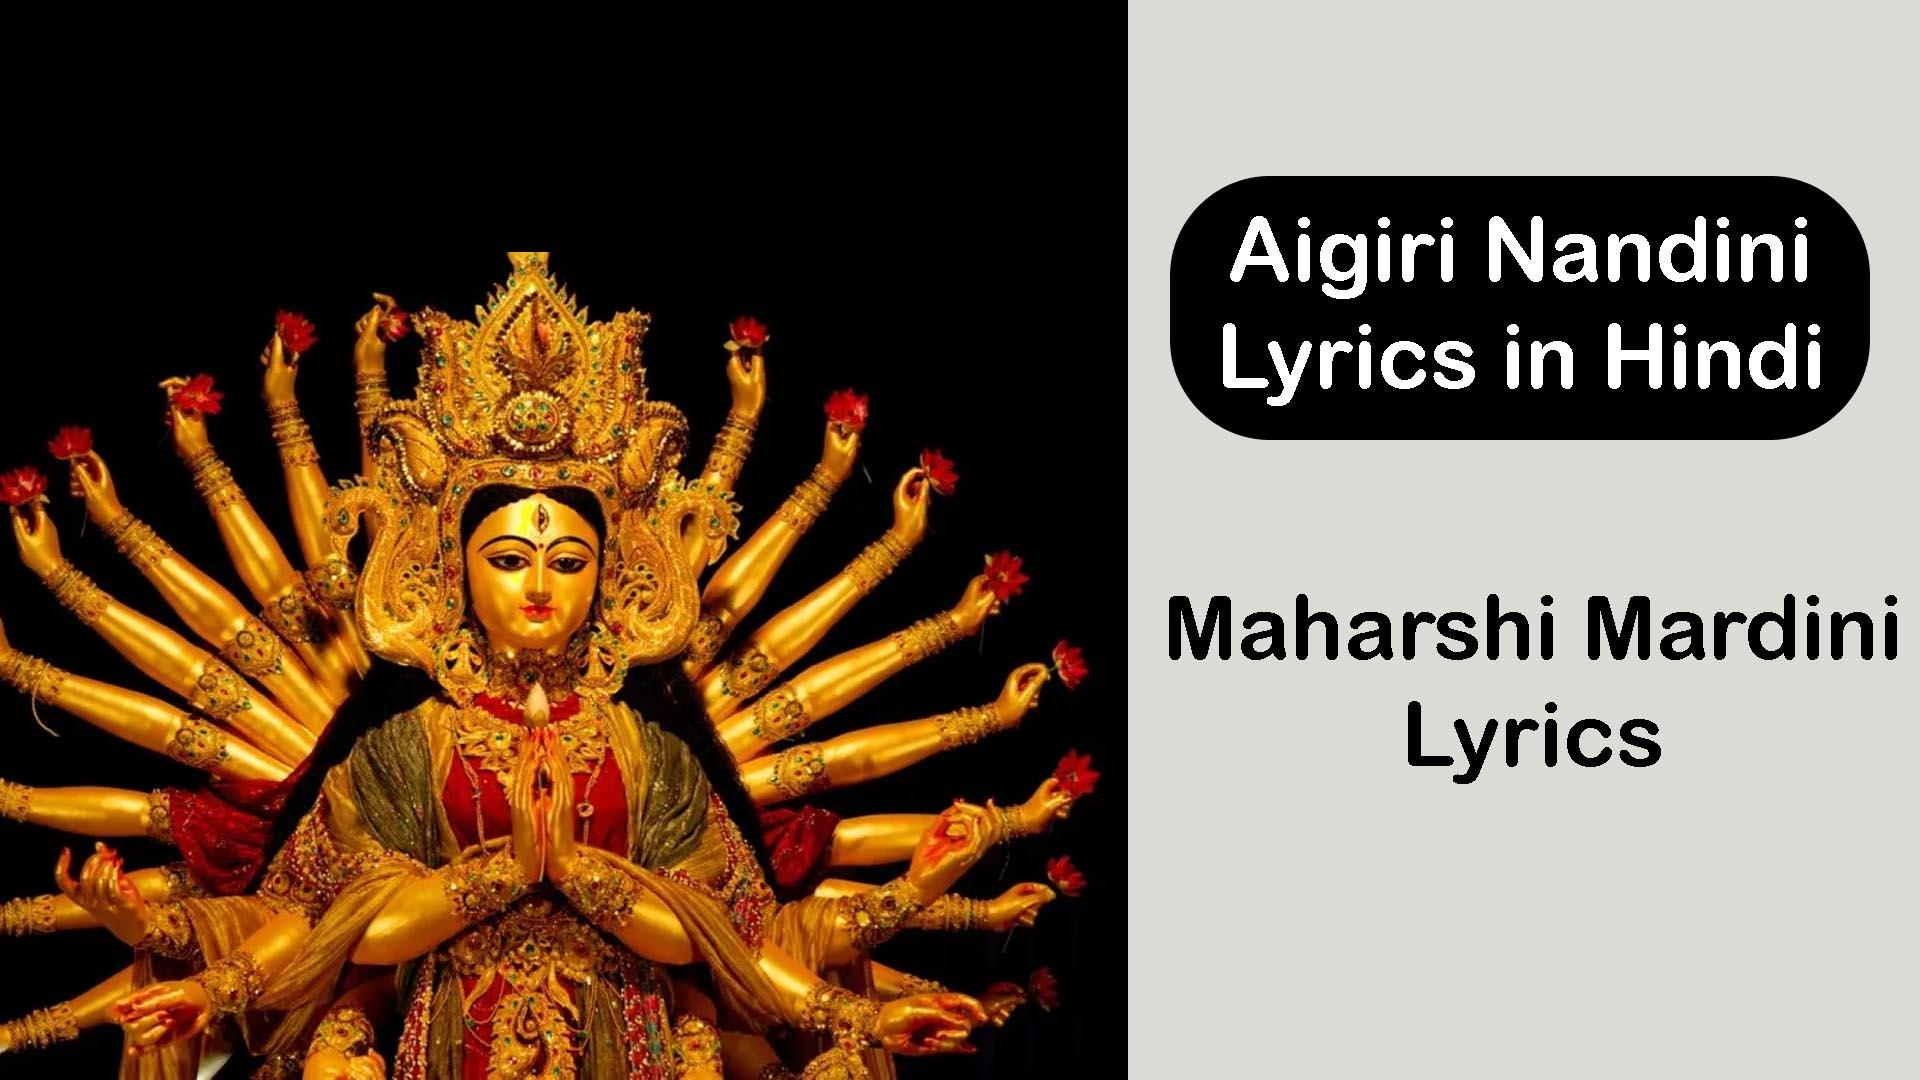 aigiri nandini lyrics in hindi